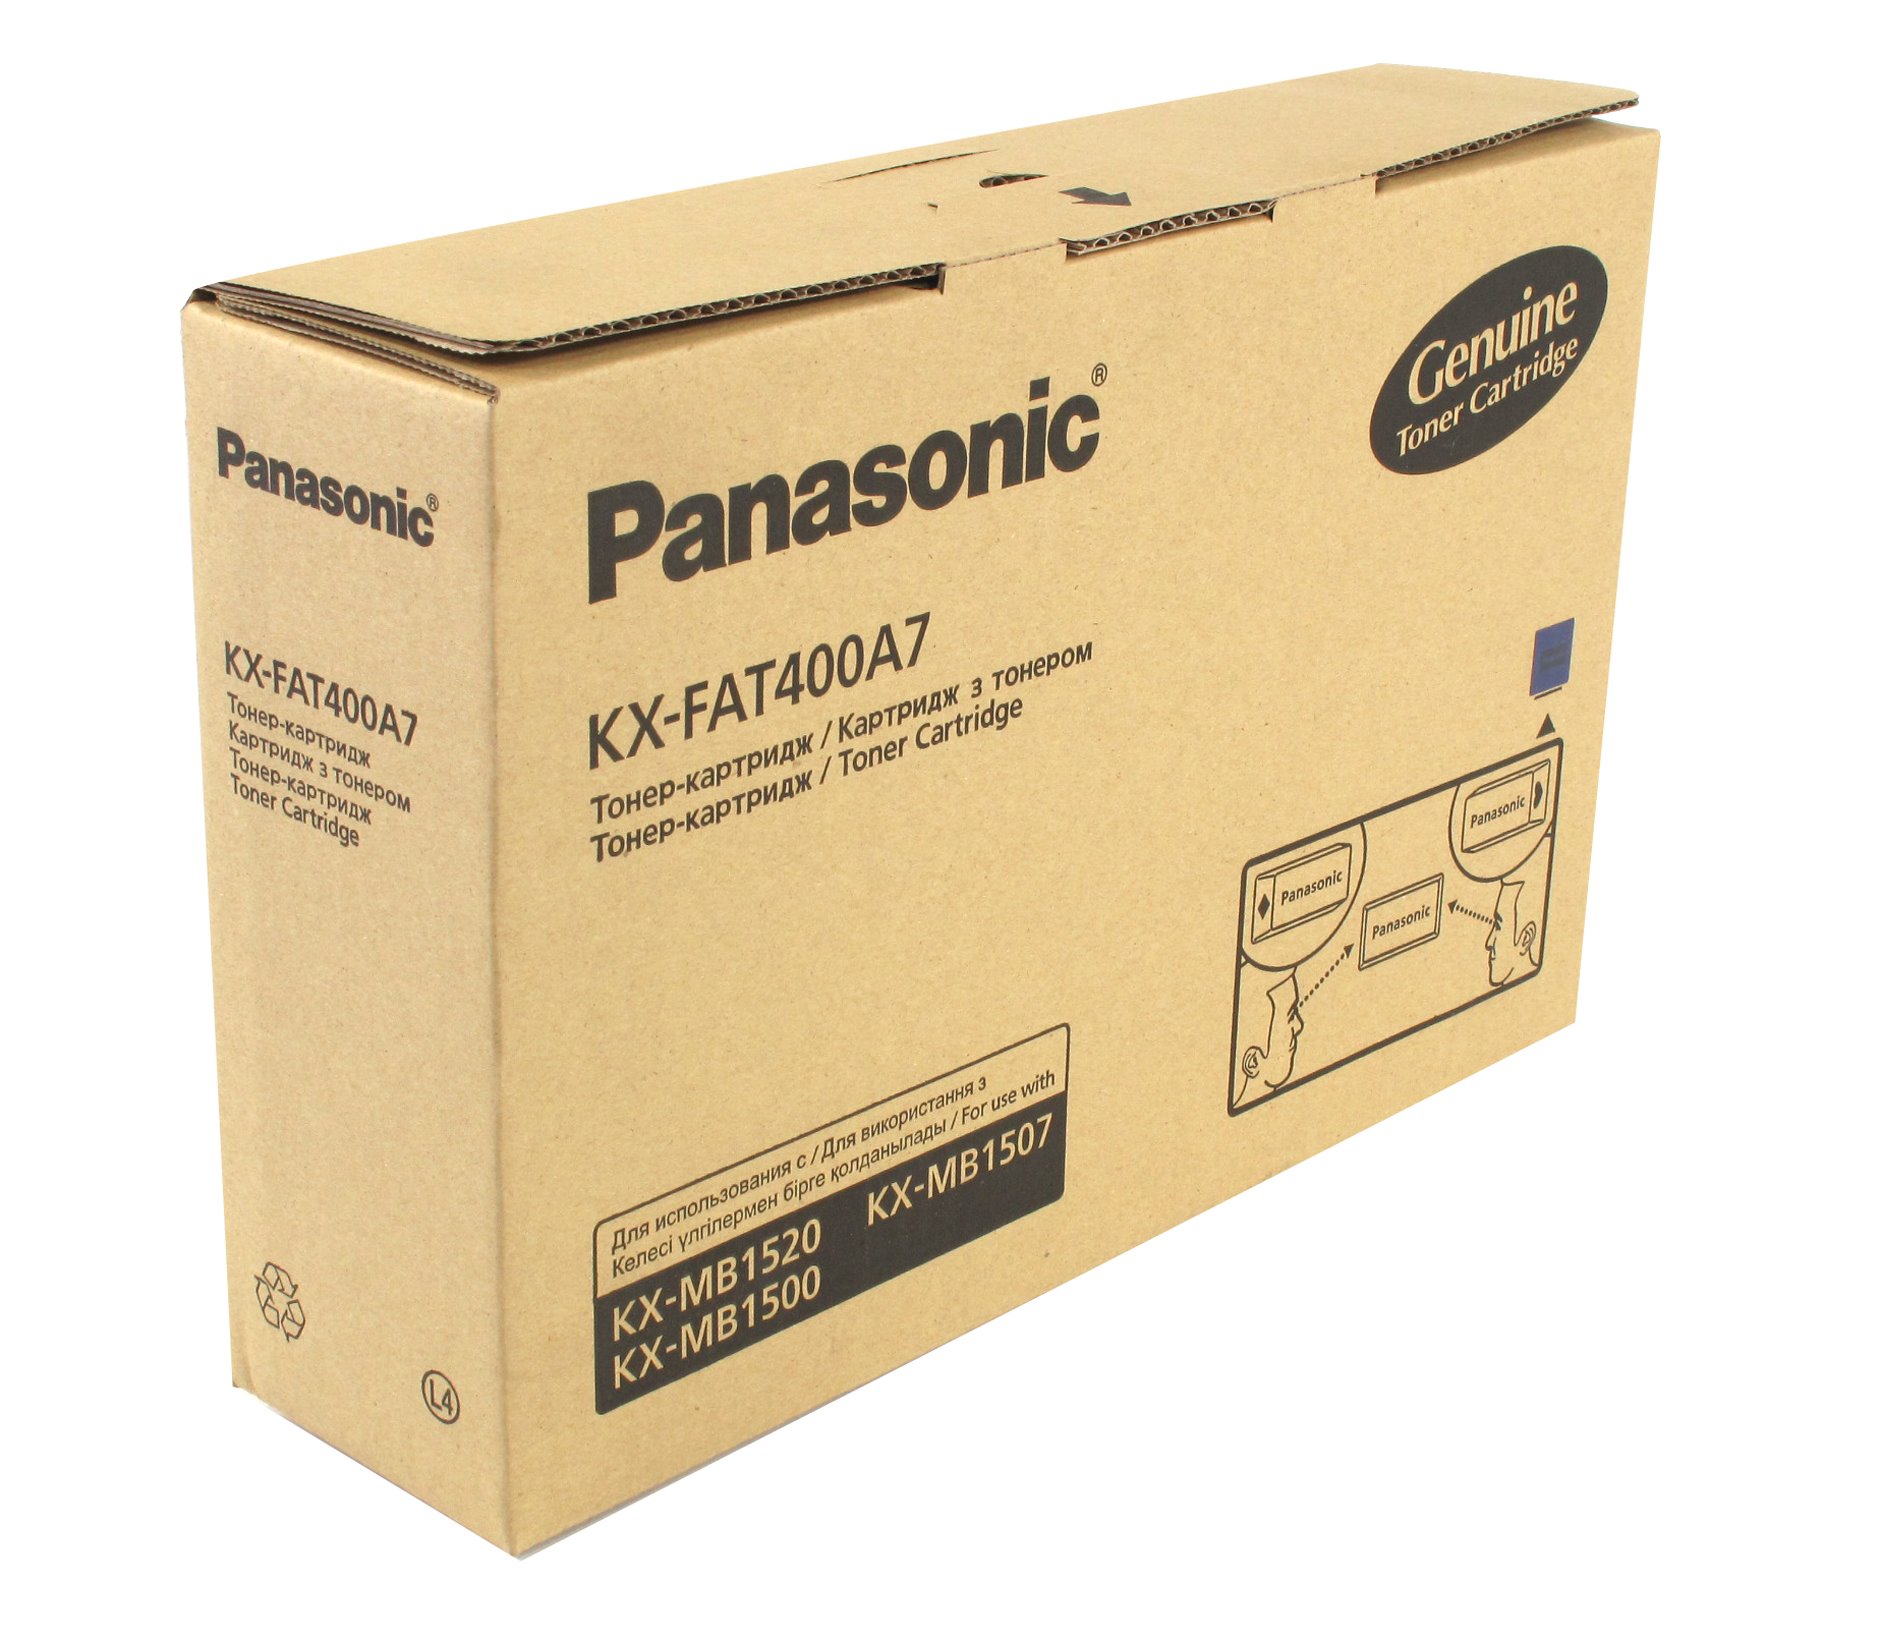 - Panasonic KX-FAT400A (1 800 .) 